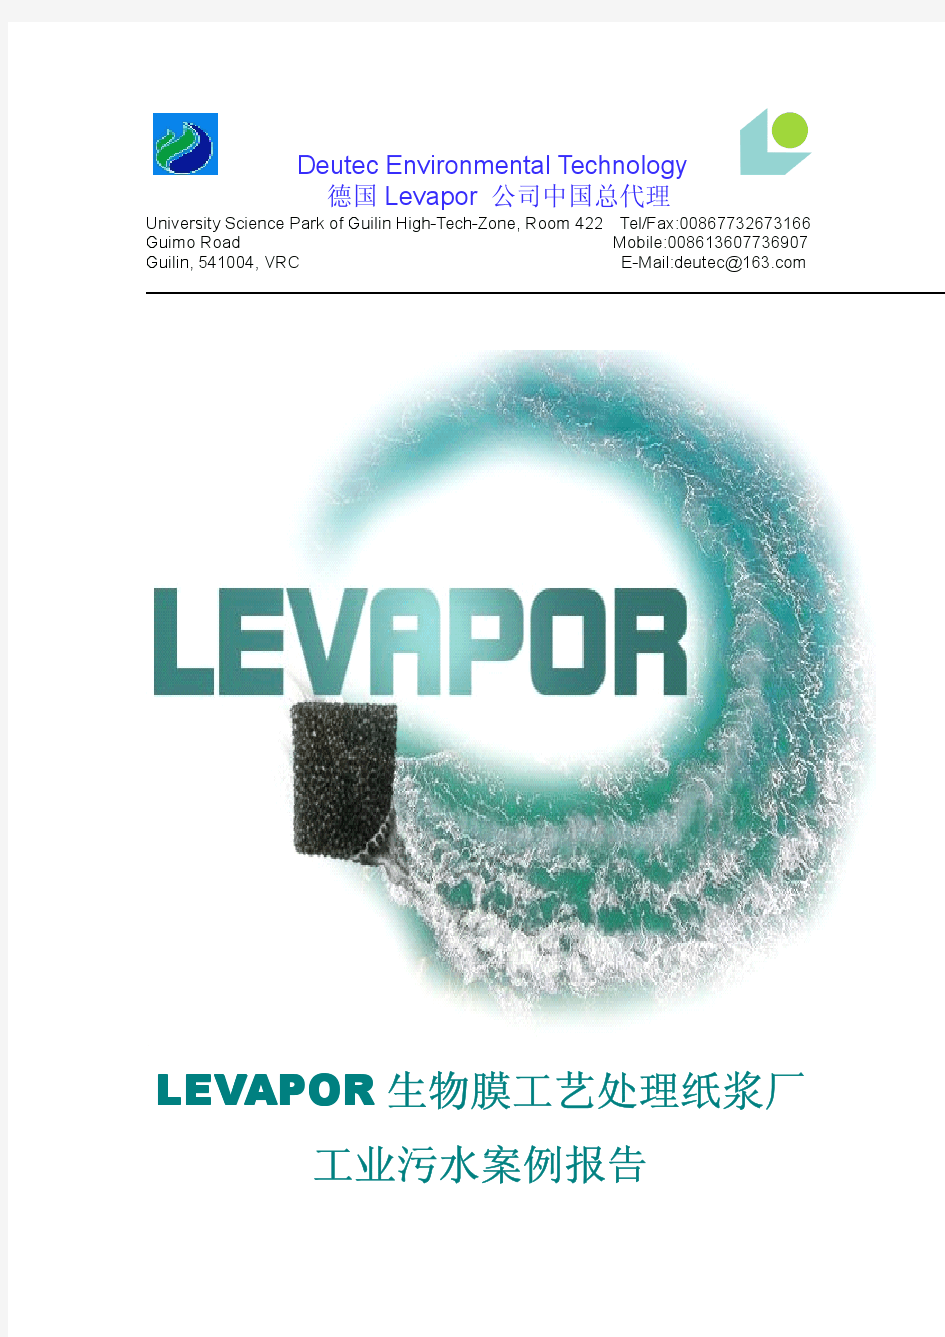 LEVAPOR生物膜工艺处理纸浆厂工业废水案例